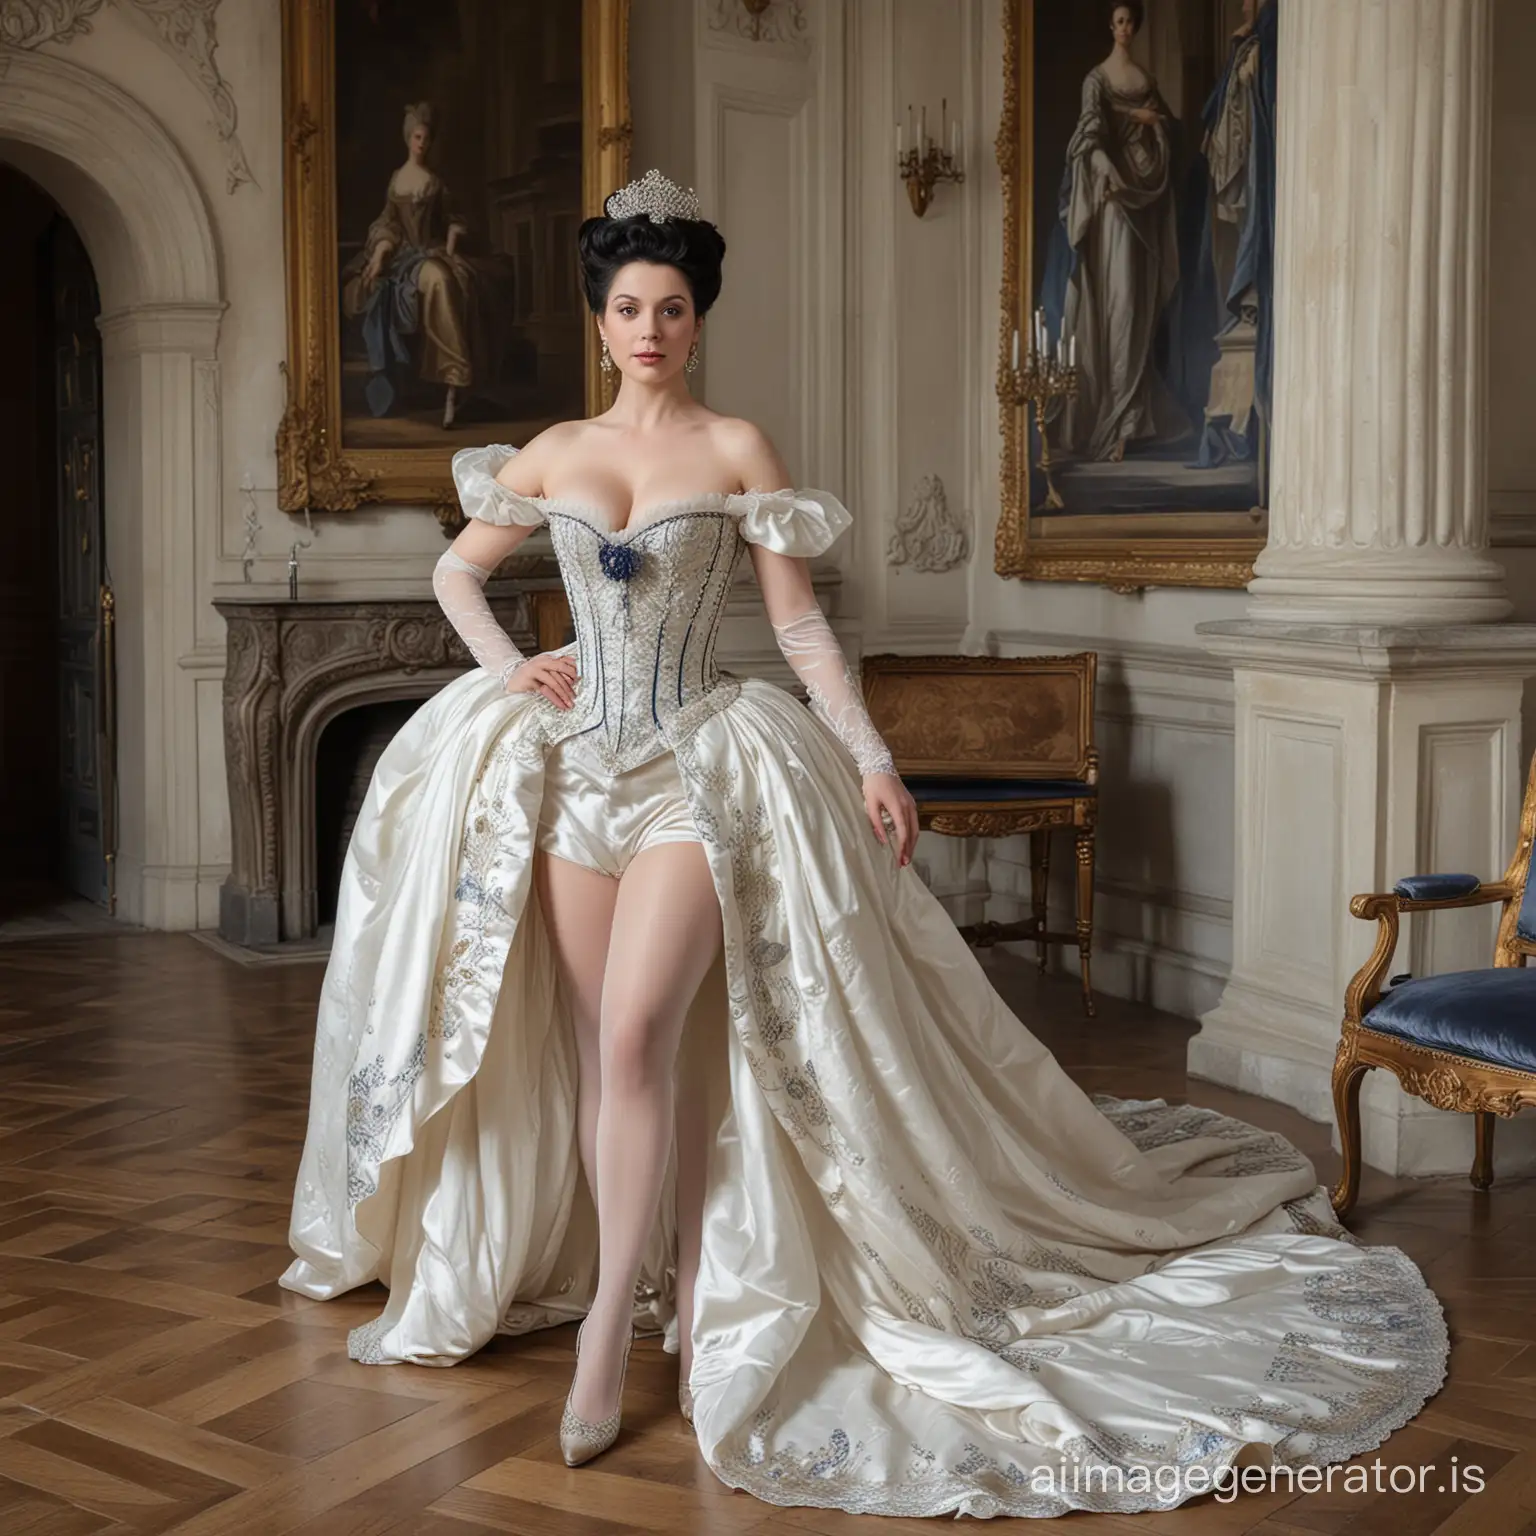 Regal-Marie-Antoinette-Style-Queen-of-France-in-Castle